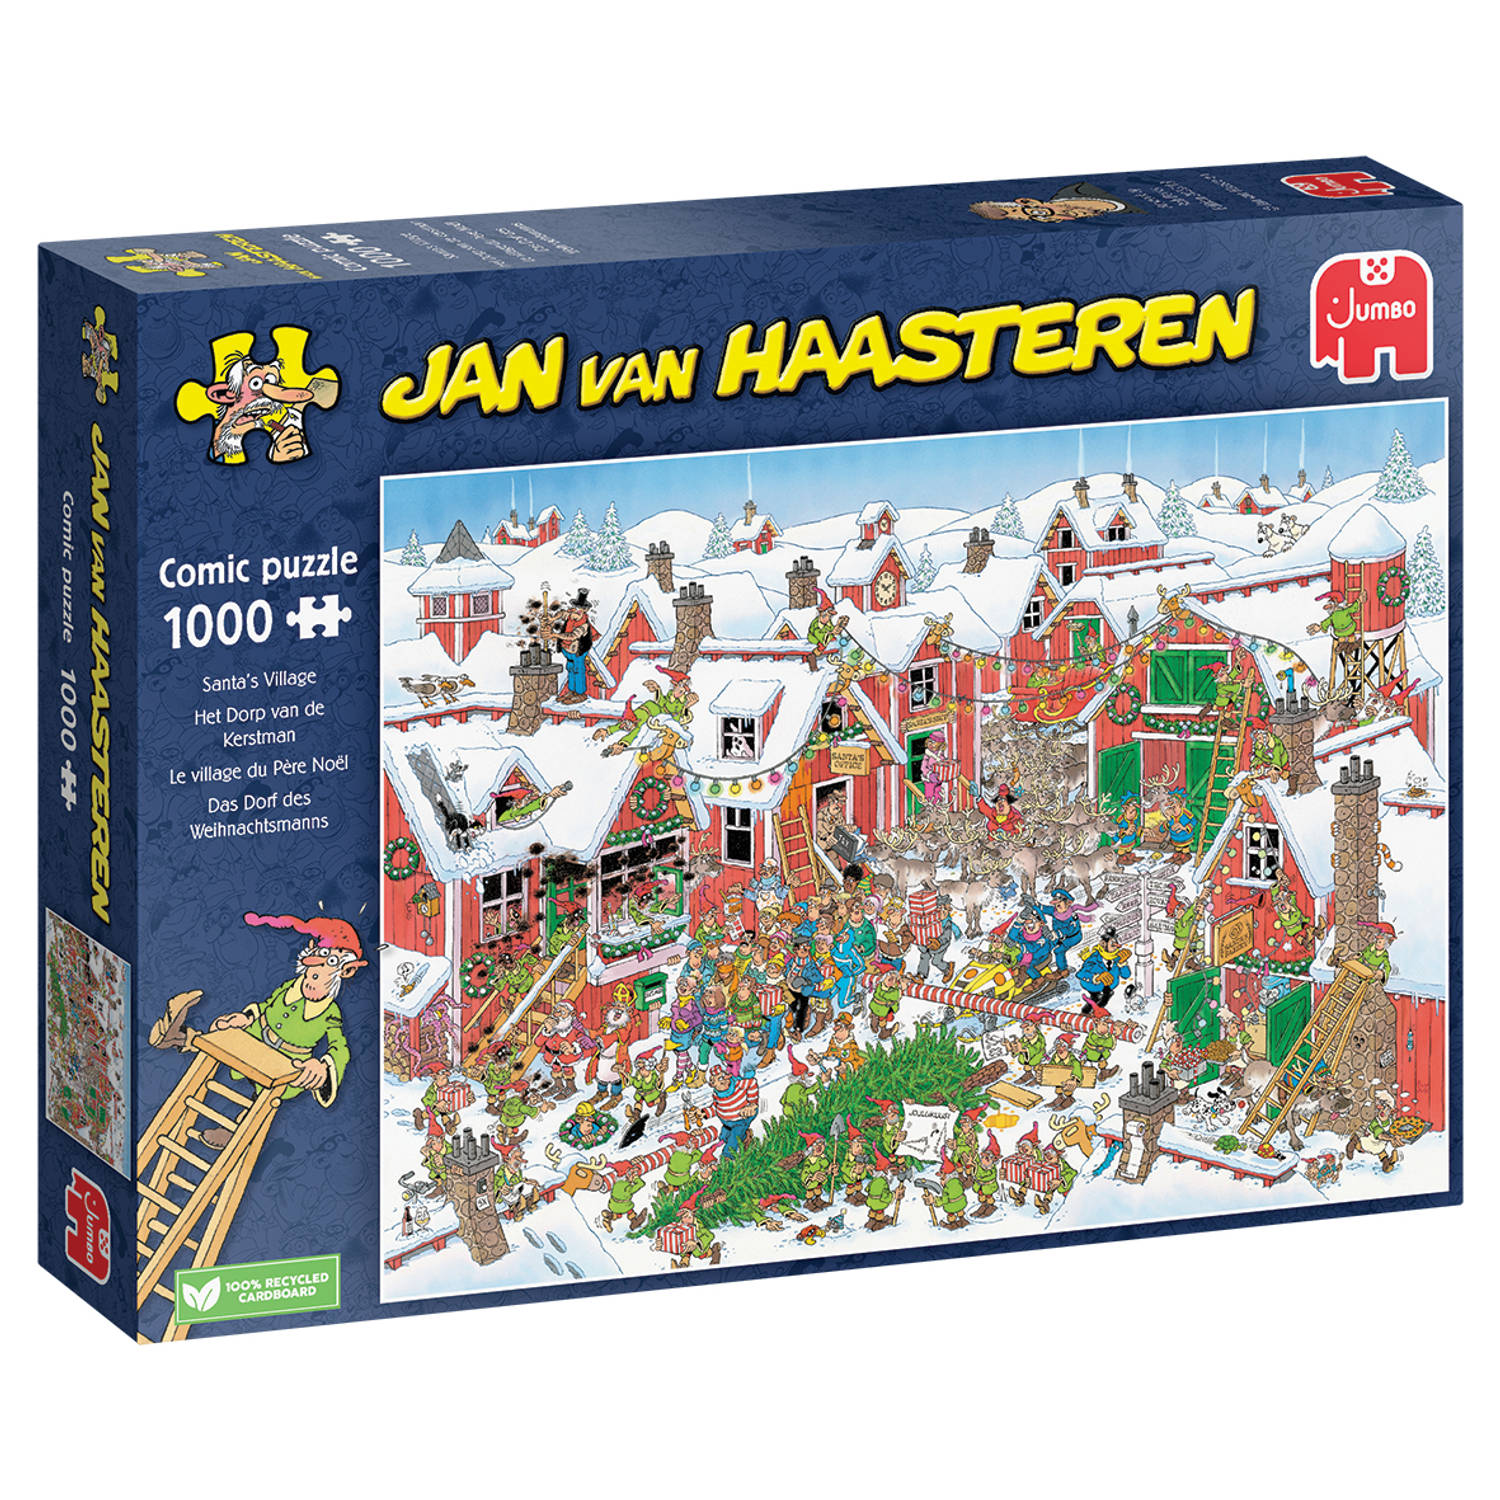 Jumbo Jan Van Haasteren Puzzel Santa's Village 1000pcs (title Not Final)